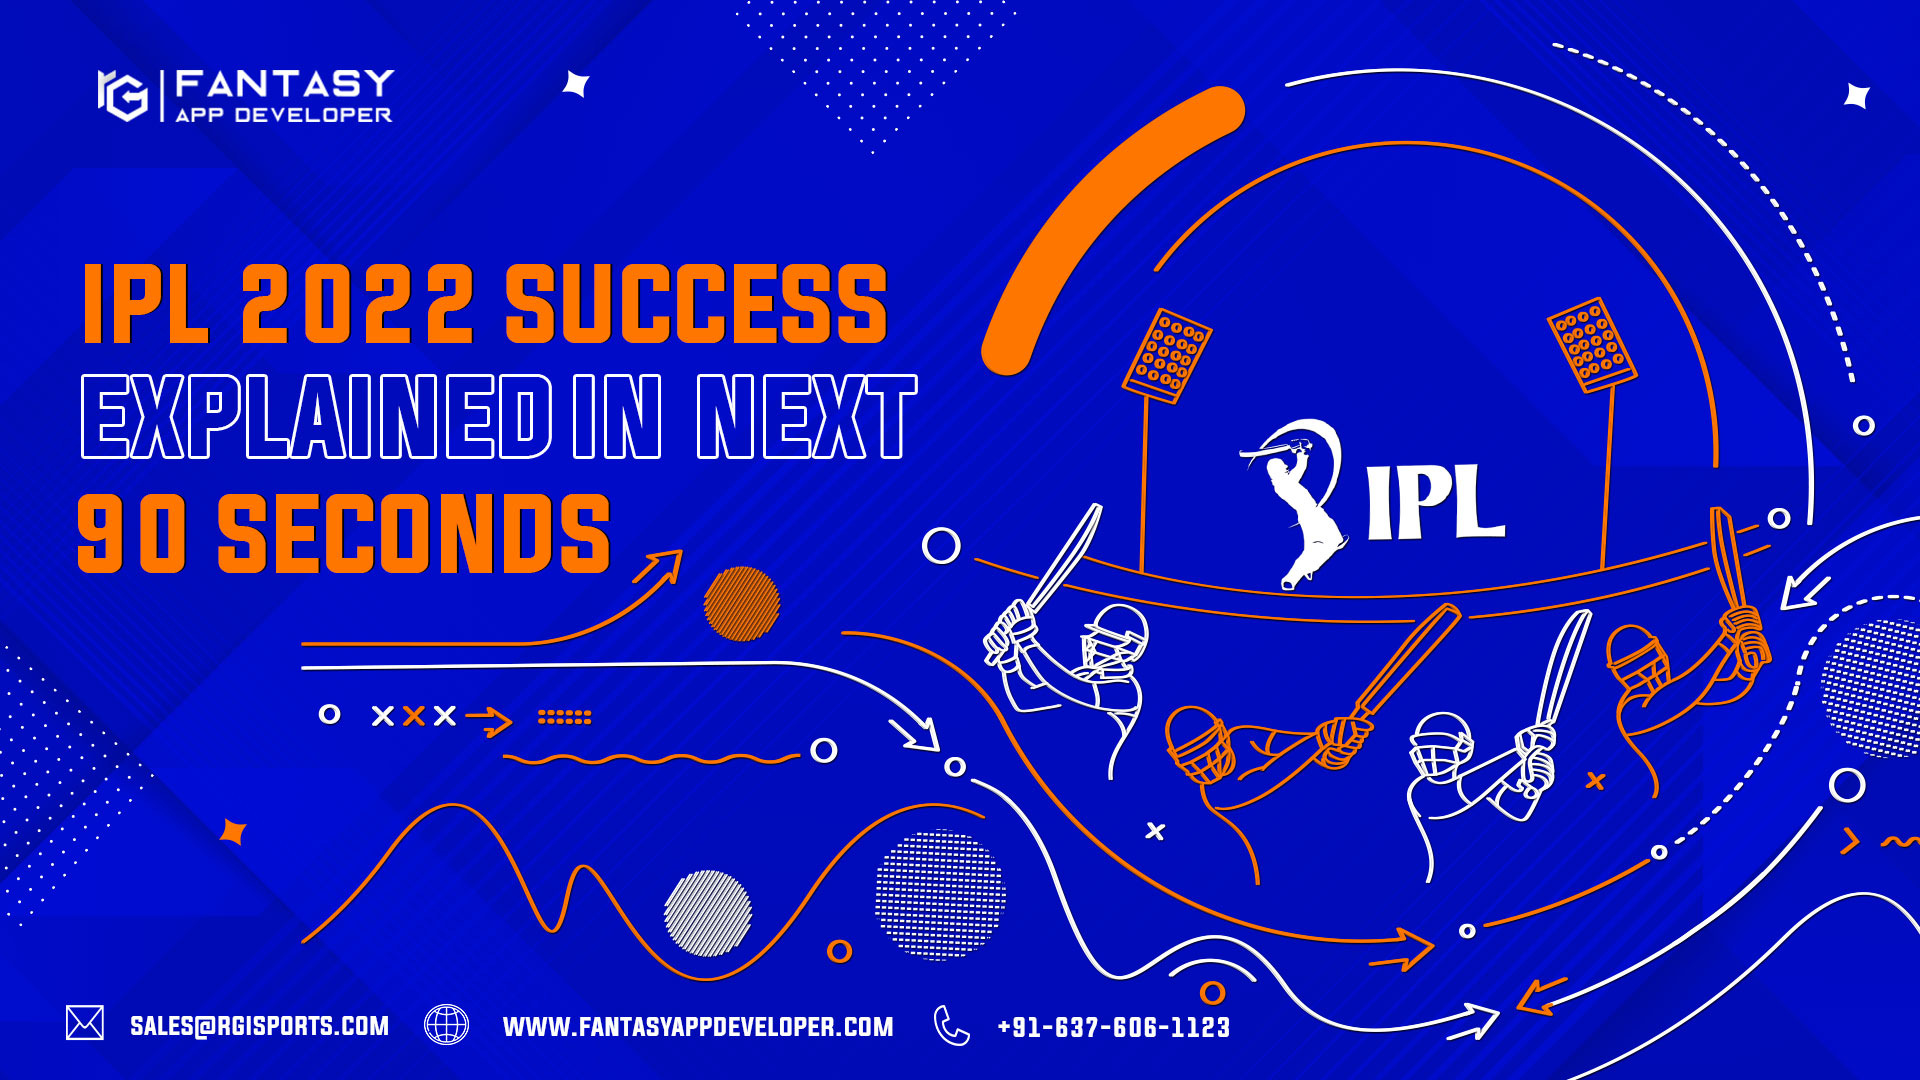 IPL 2022 Success explained in next 90 seconds